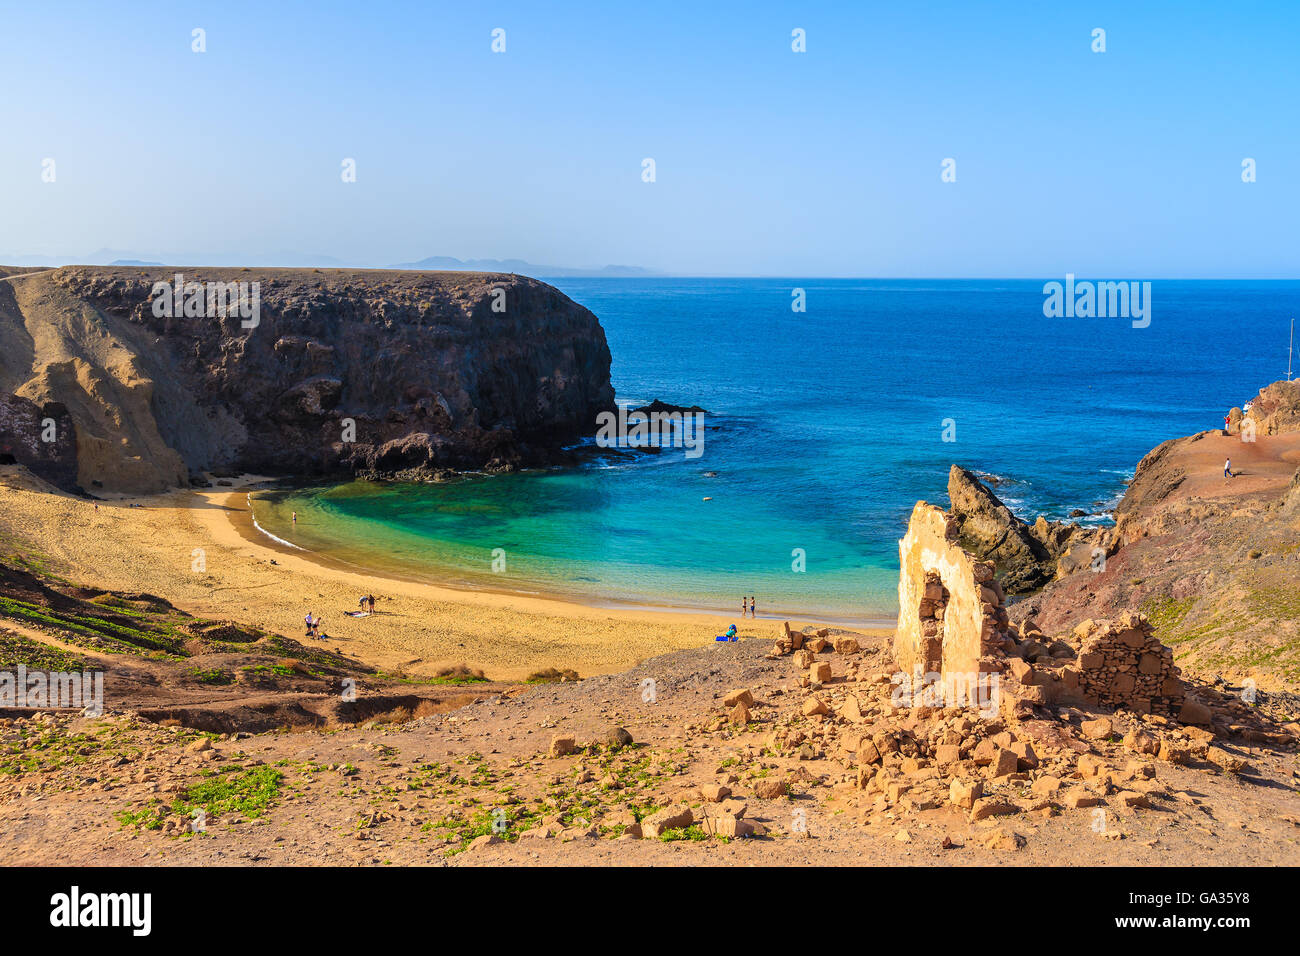 View of Papagayo beach, Lanzarote, Canary Islands, Spain Stock Photo